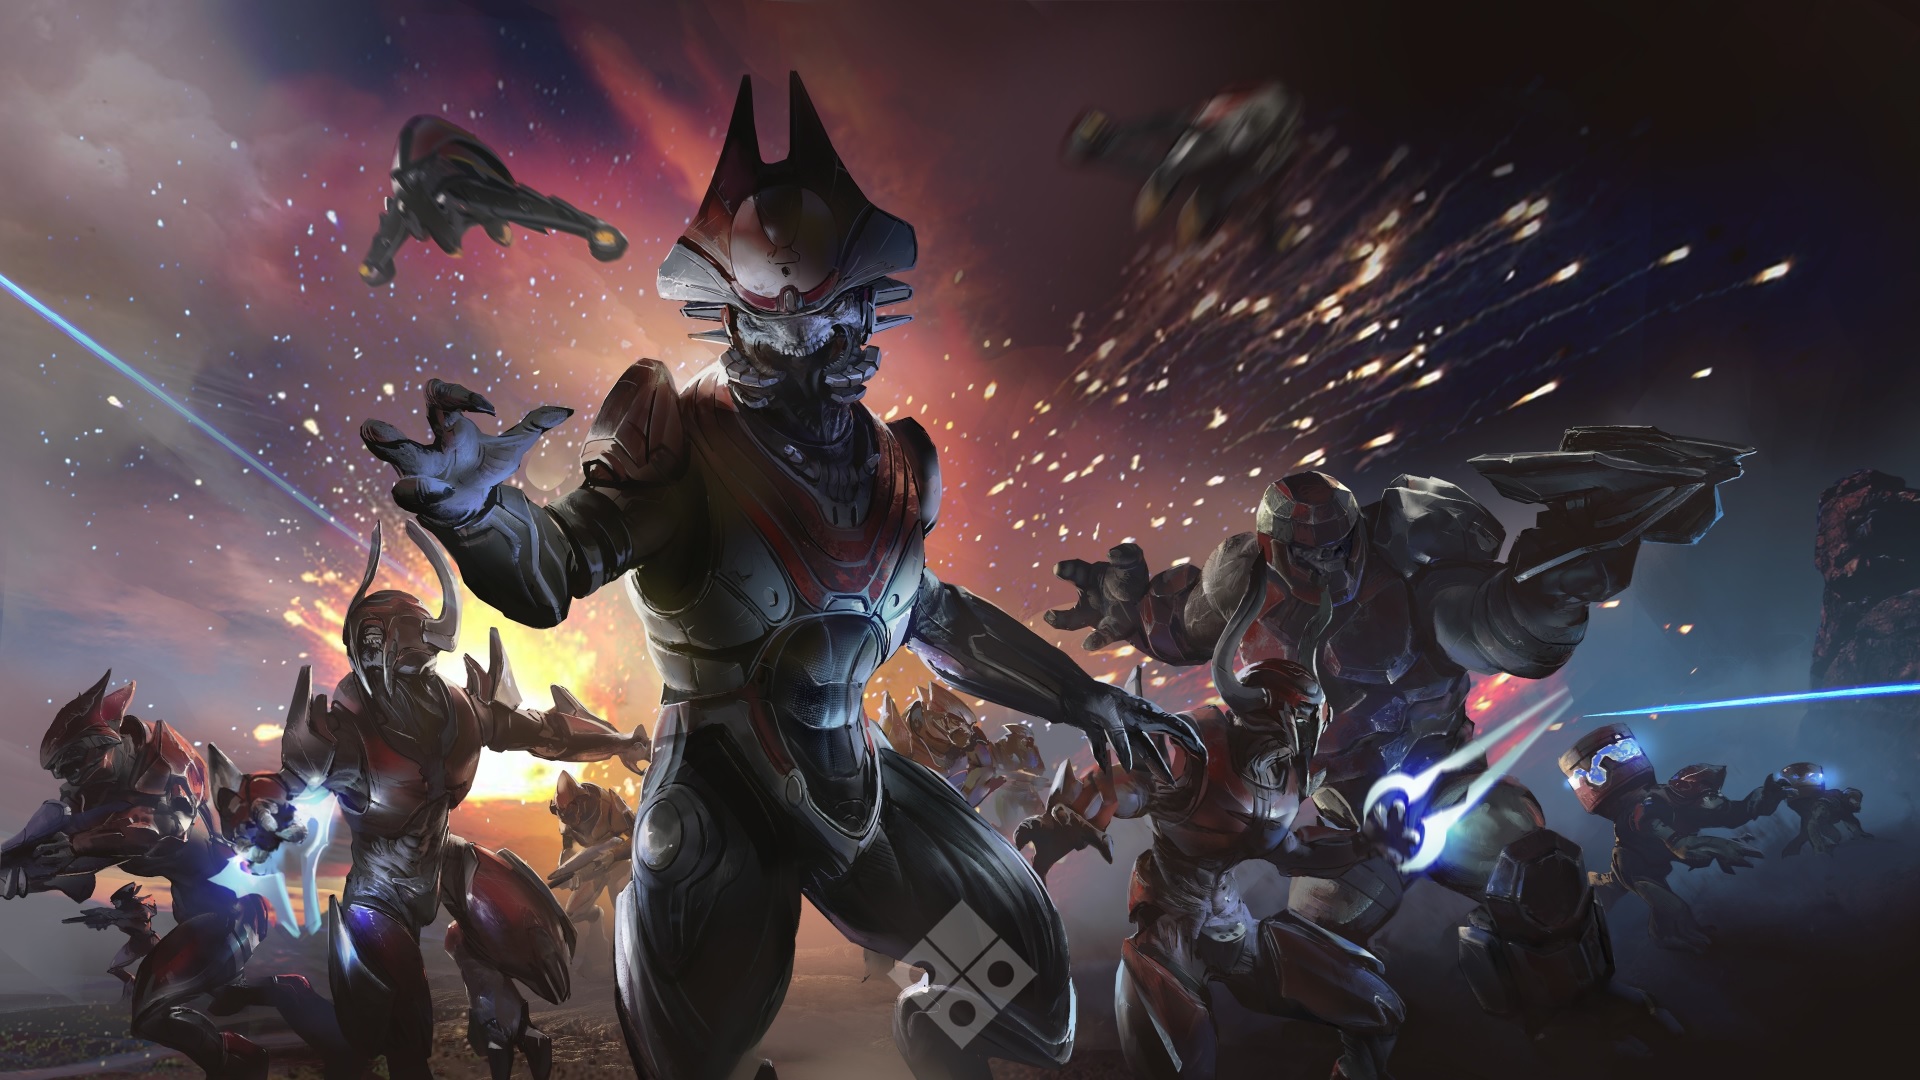 Canon Fodder header image of Halo Wars 2 art showing Let 'Volir leading a group of Banished forces